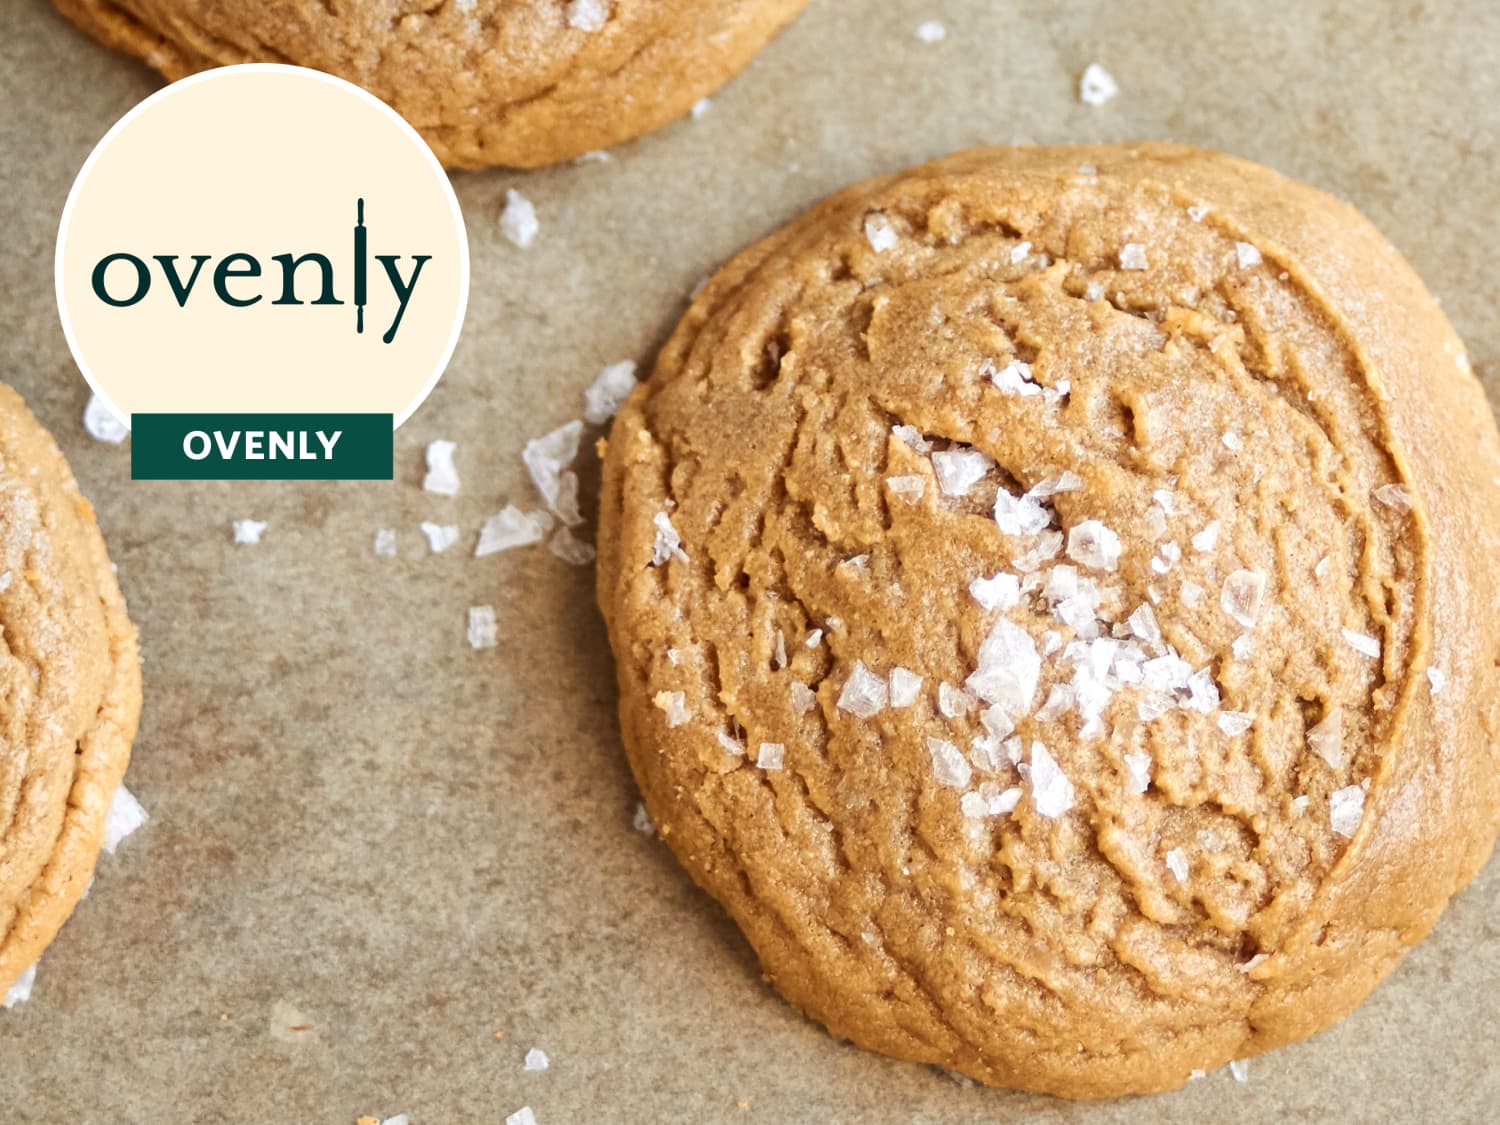 Peanut M & M Cookies - Ginger Snaps Baking Affairs